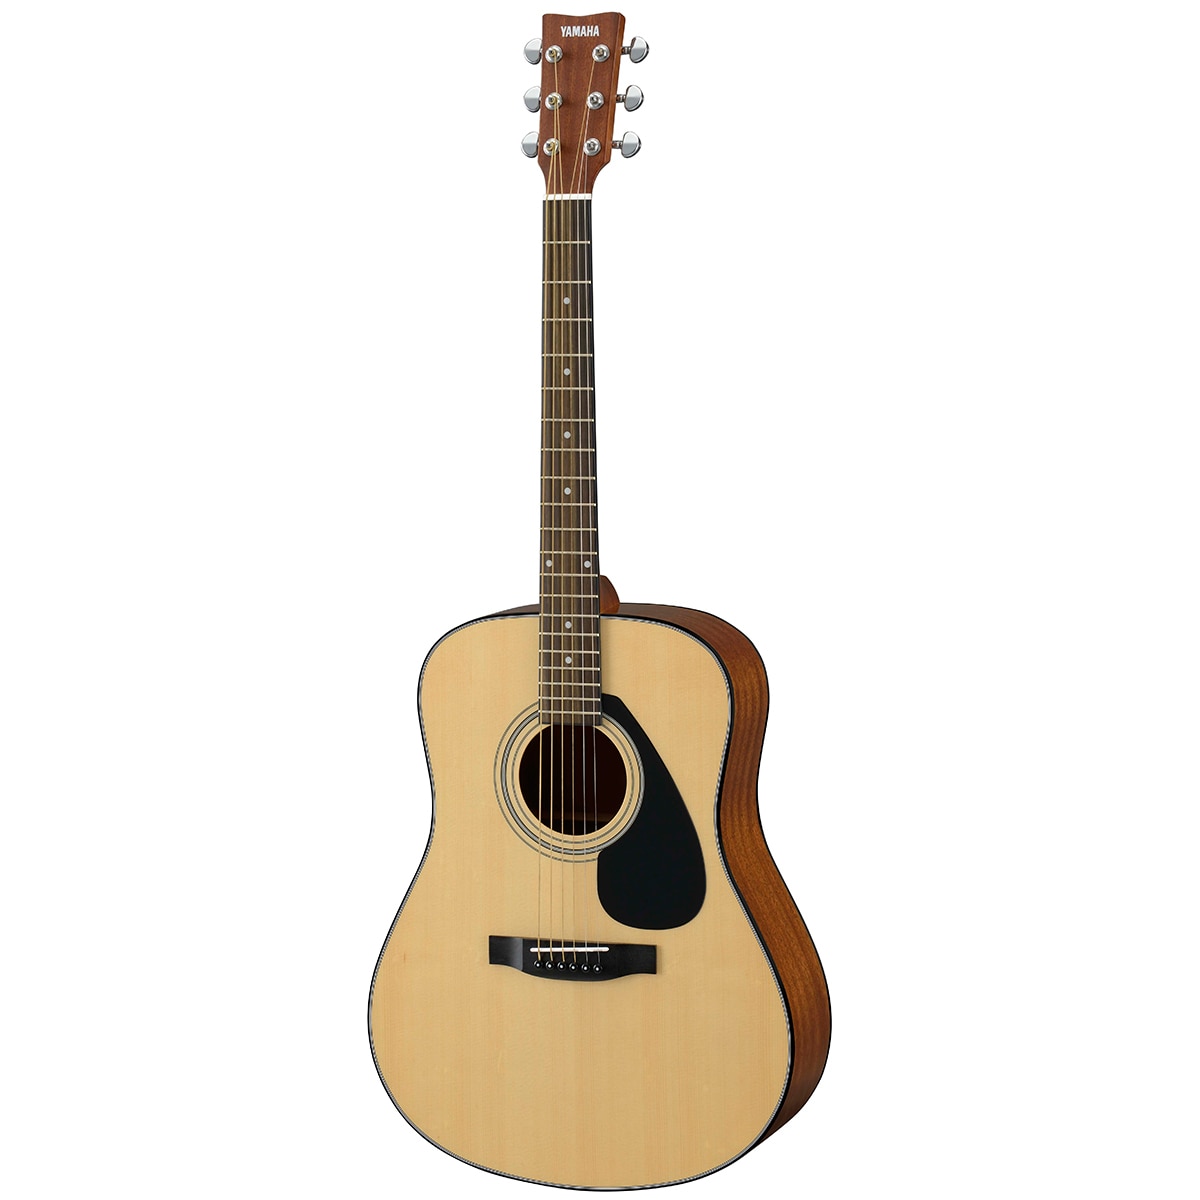 Yamaha Acoustic Guitar Pack